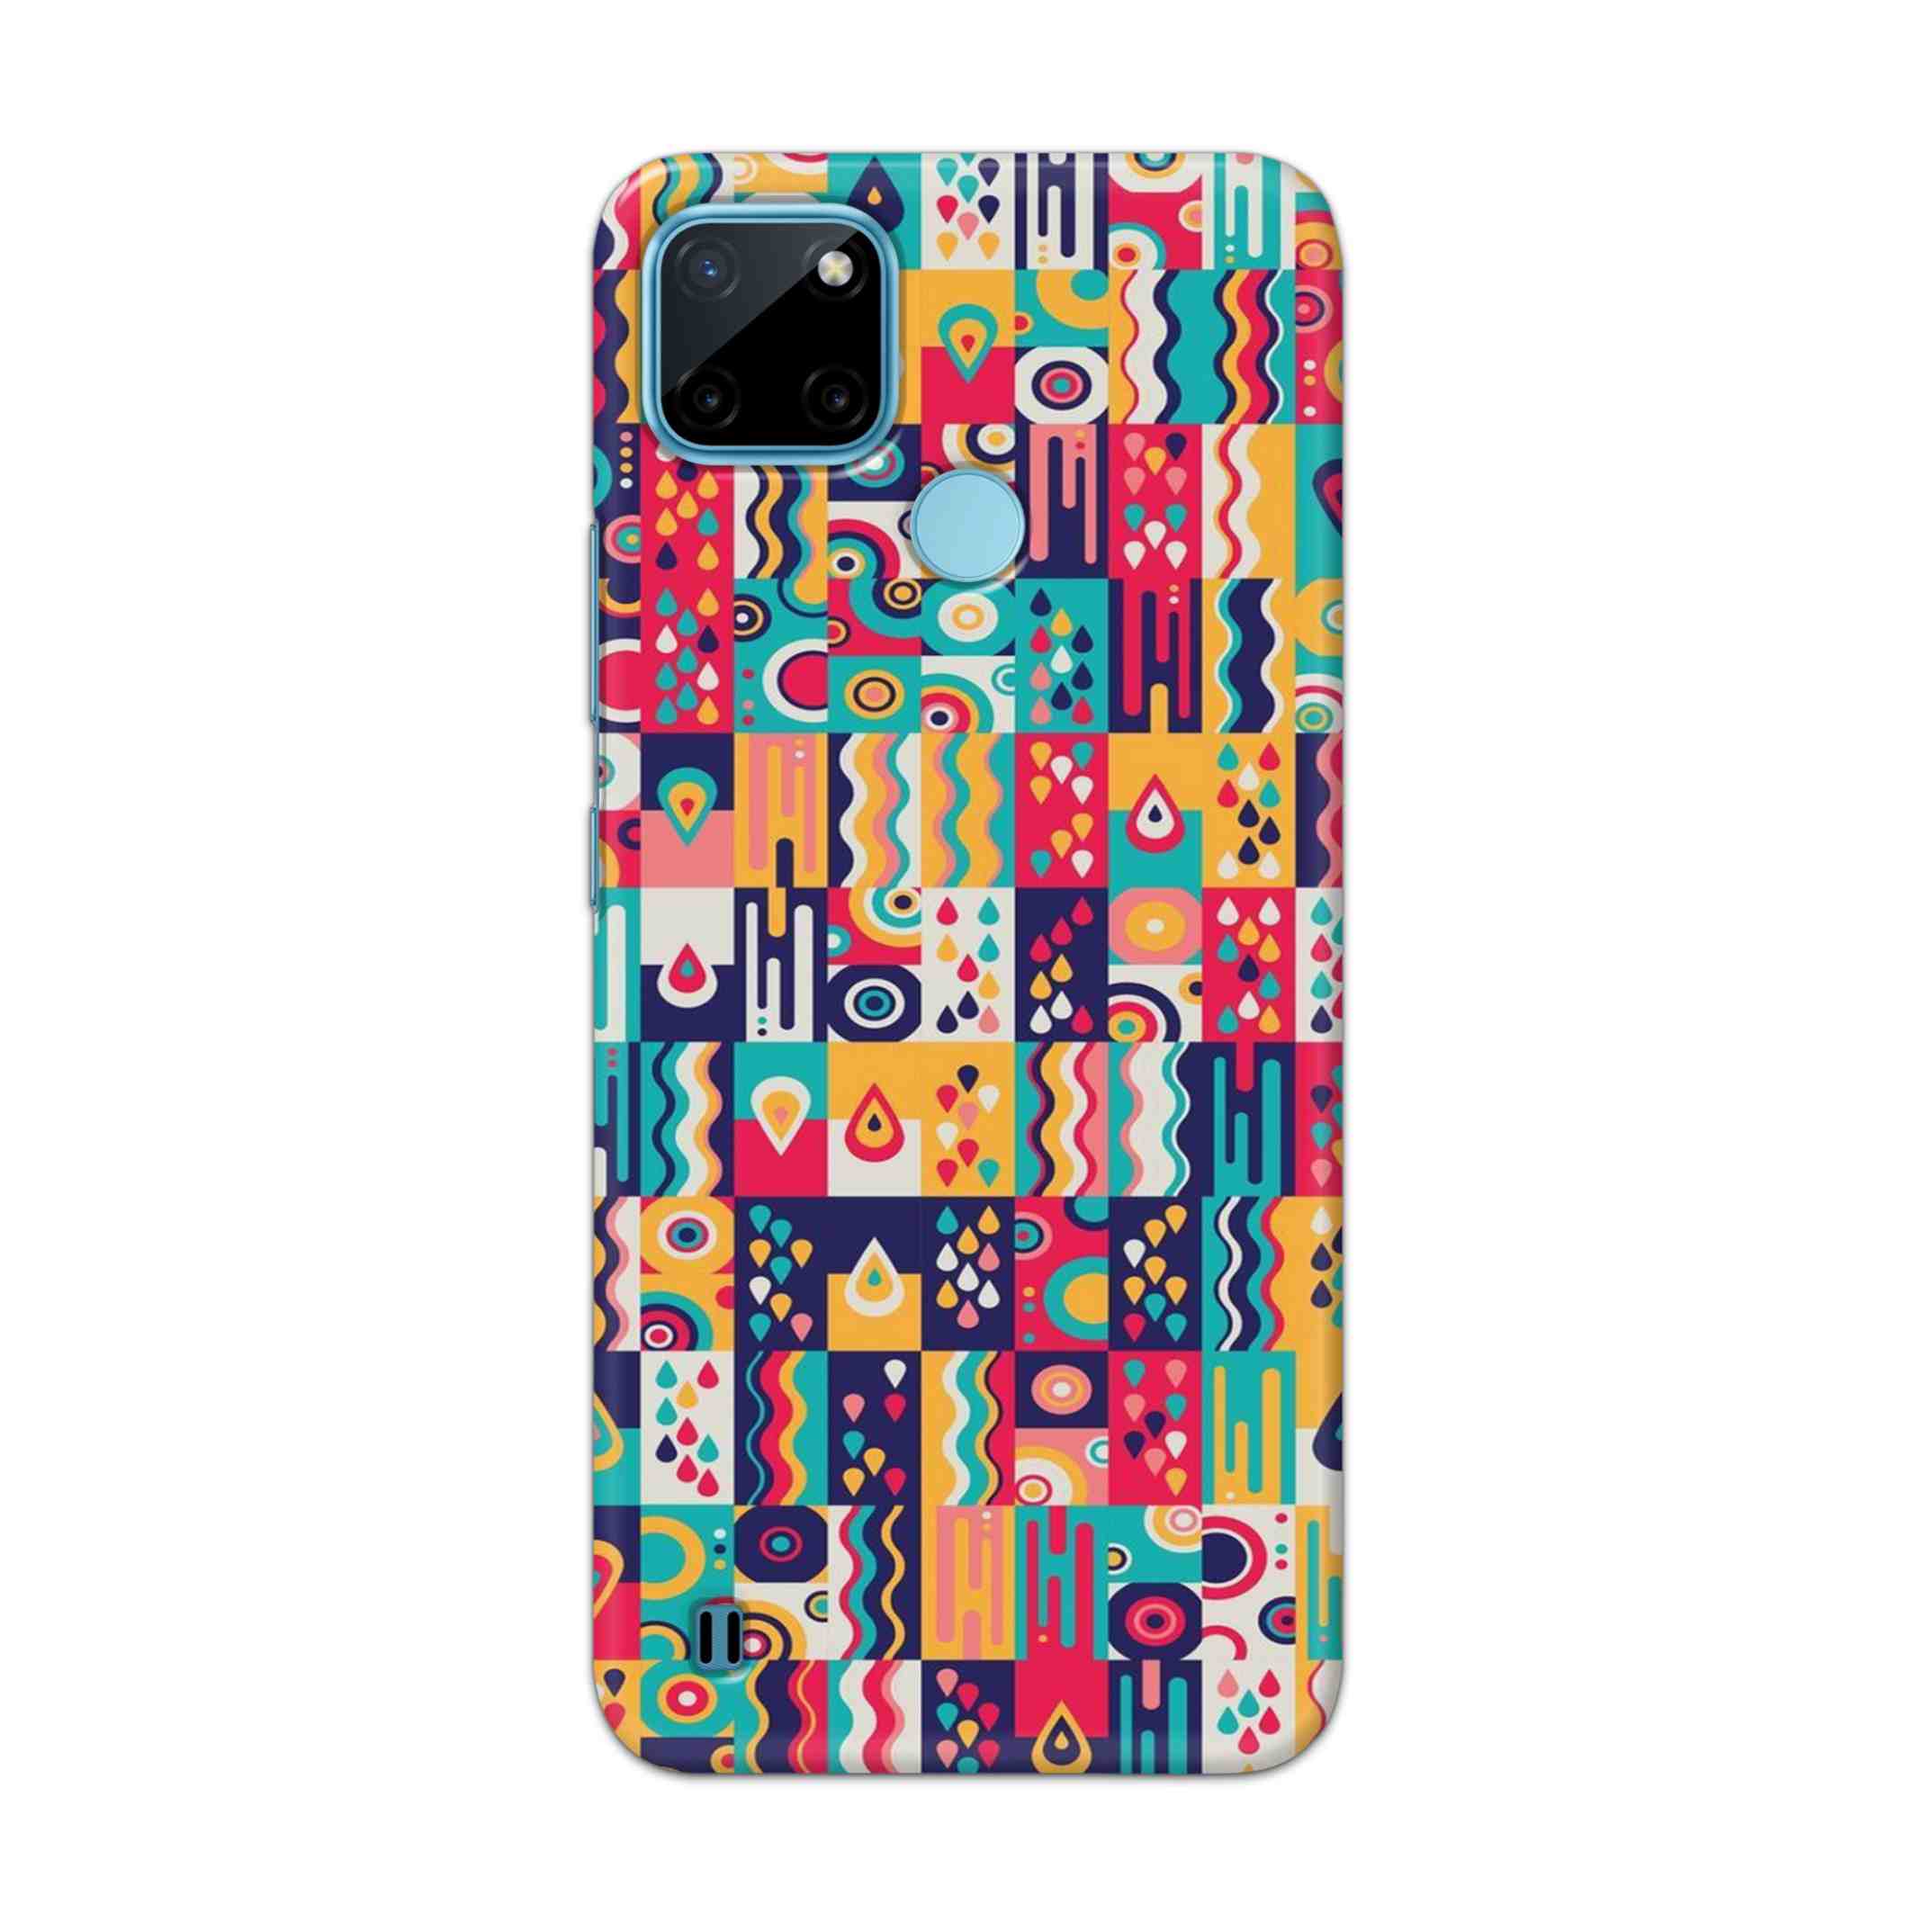 Buy Art Hard Back Mobile Phone Case Cover For Realme C21Y Online